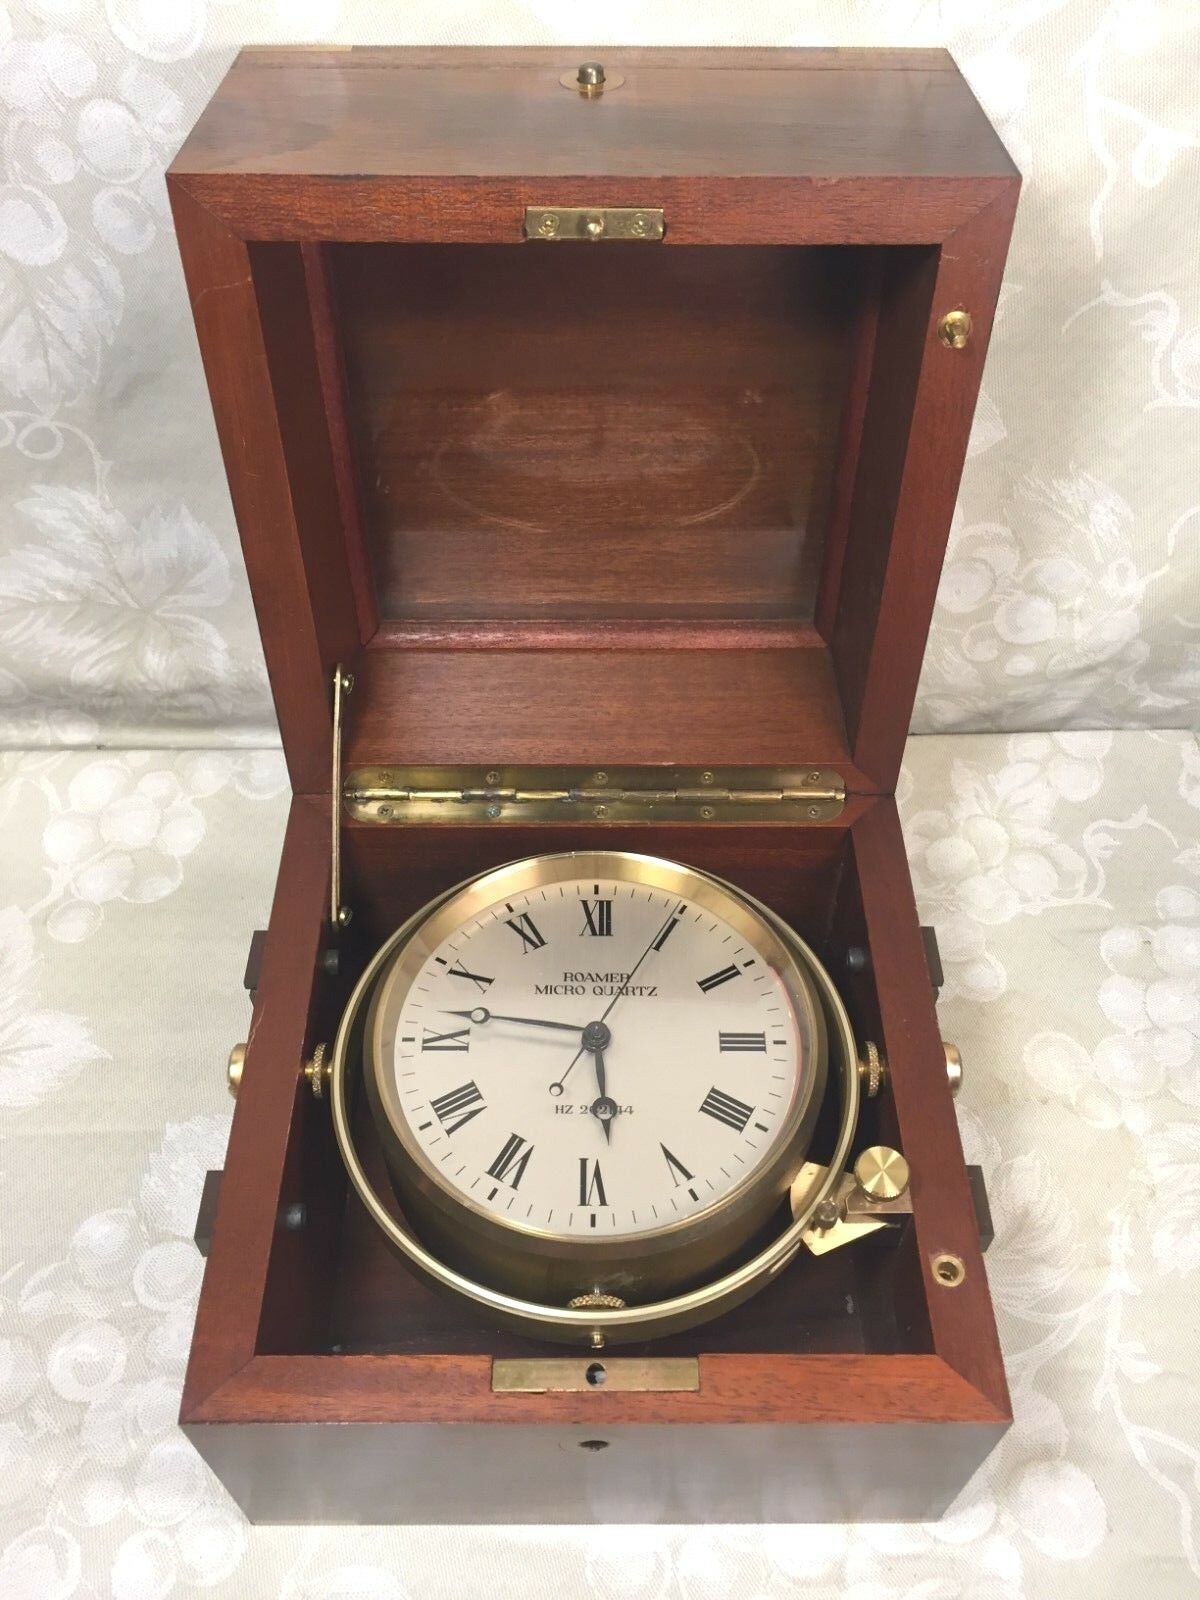 Vintage Roamer Micro Quartz Chronometer Beautiful Wood Case Swiss Movement Runs?